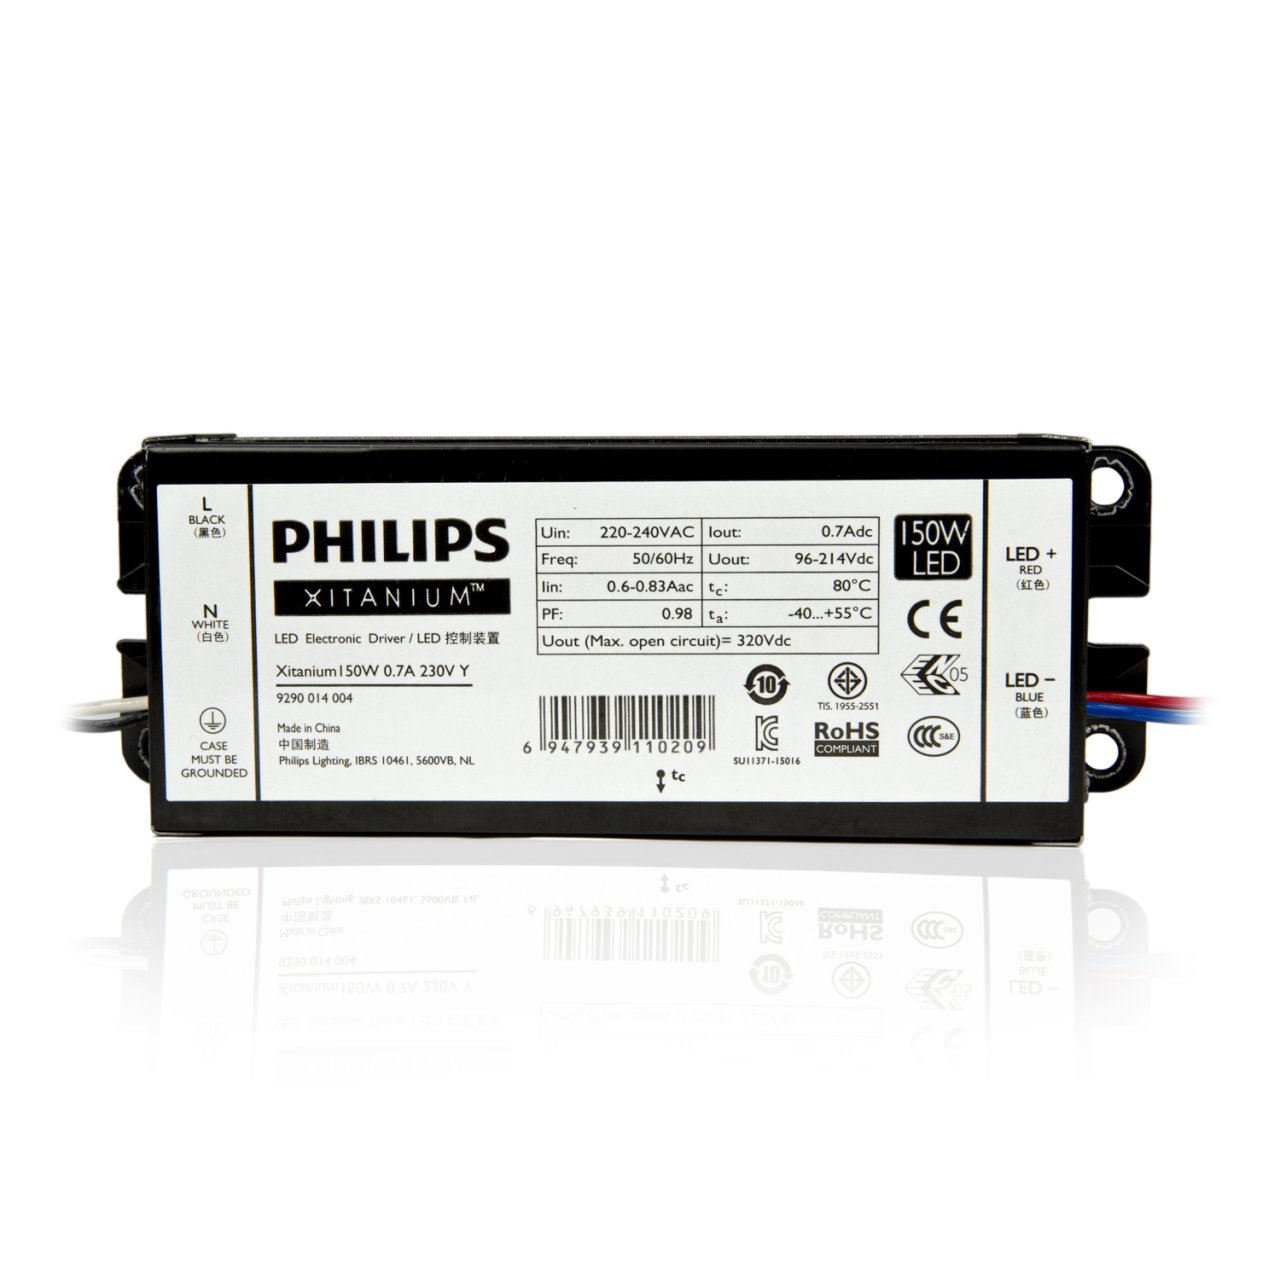 Philips Xitanium 150W 0,7A Led Driver